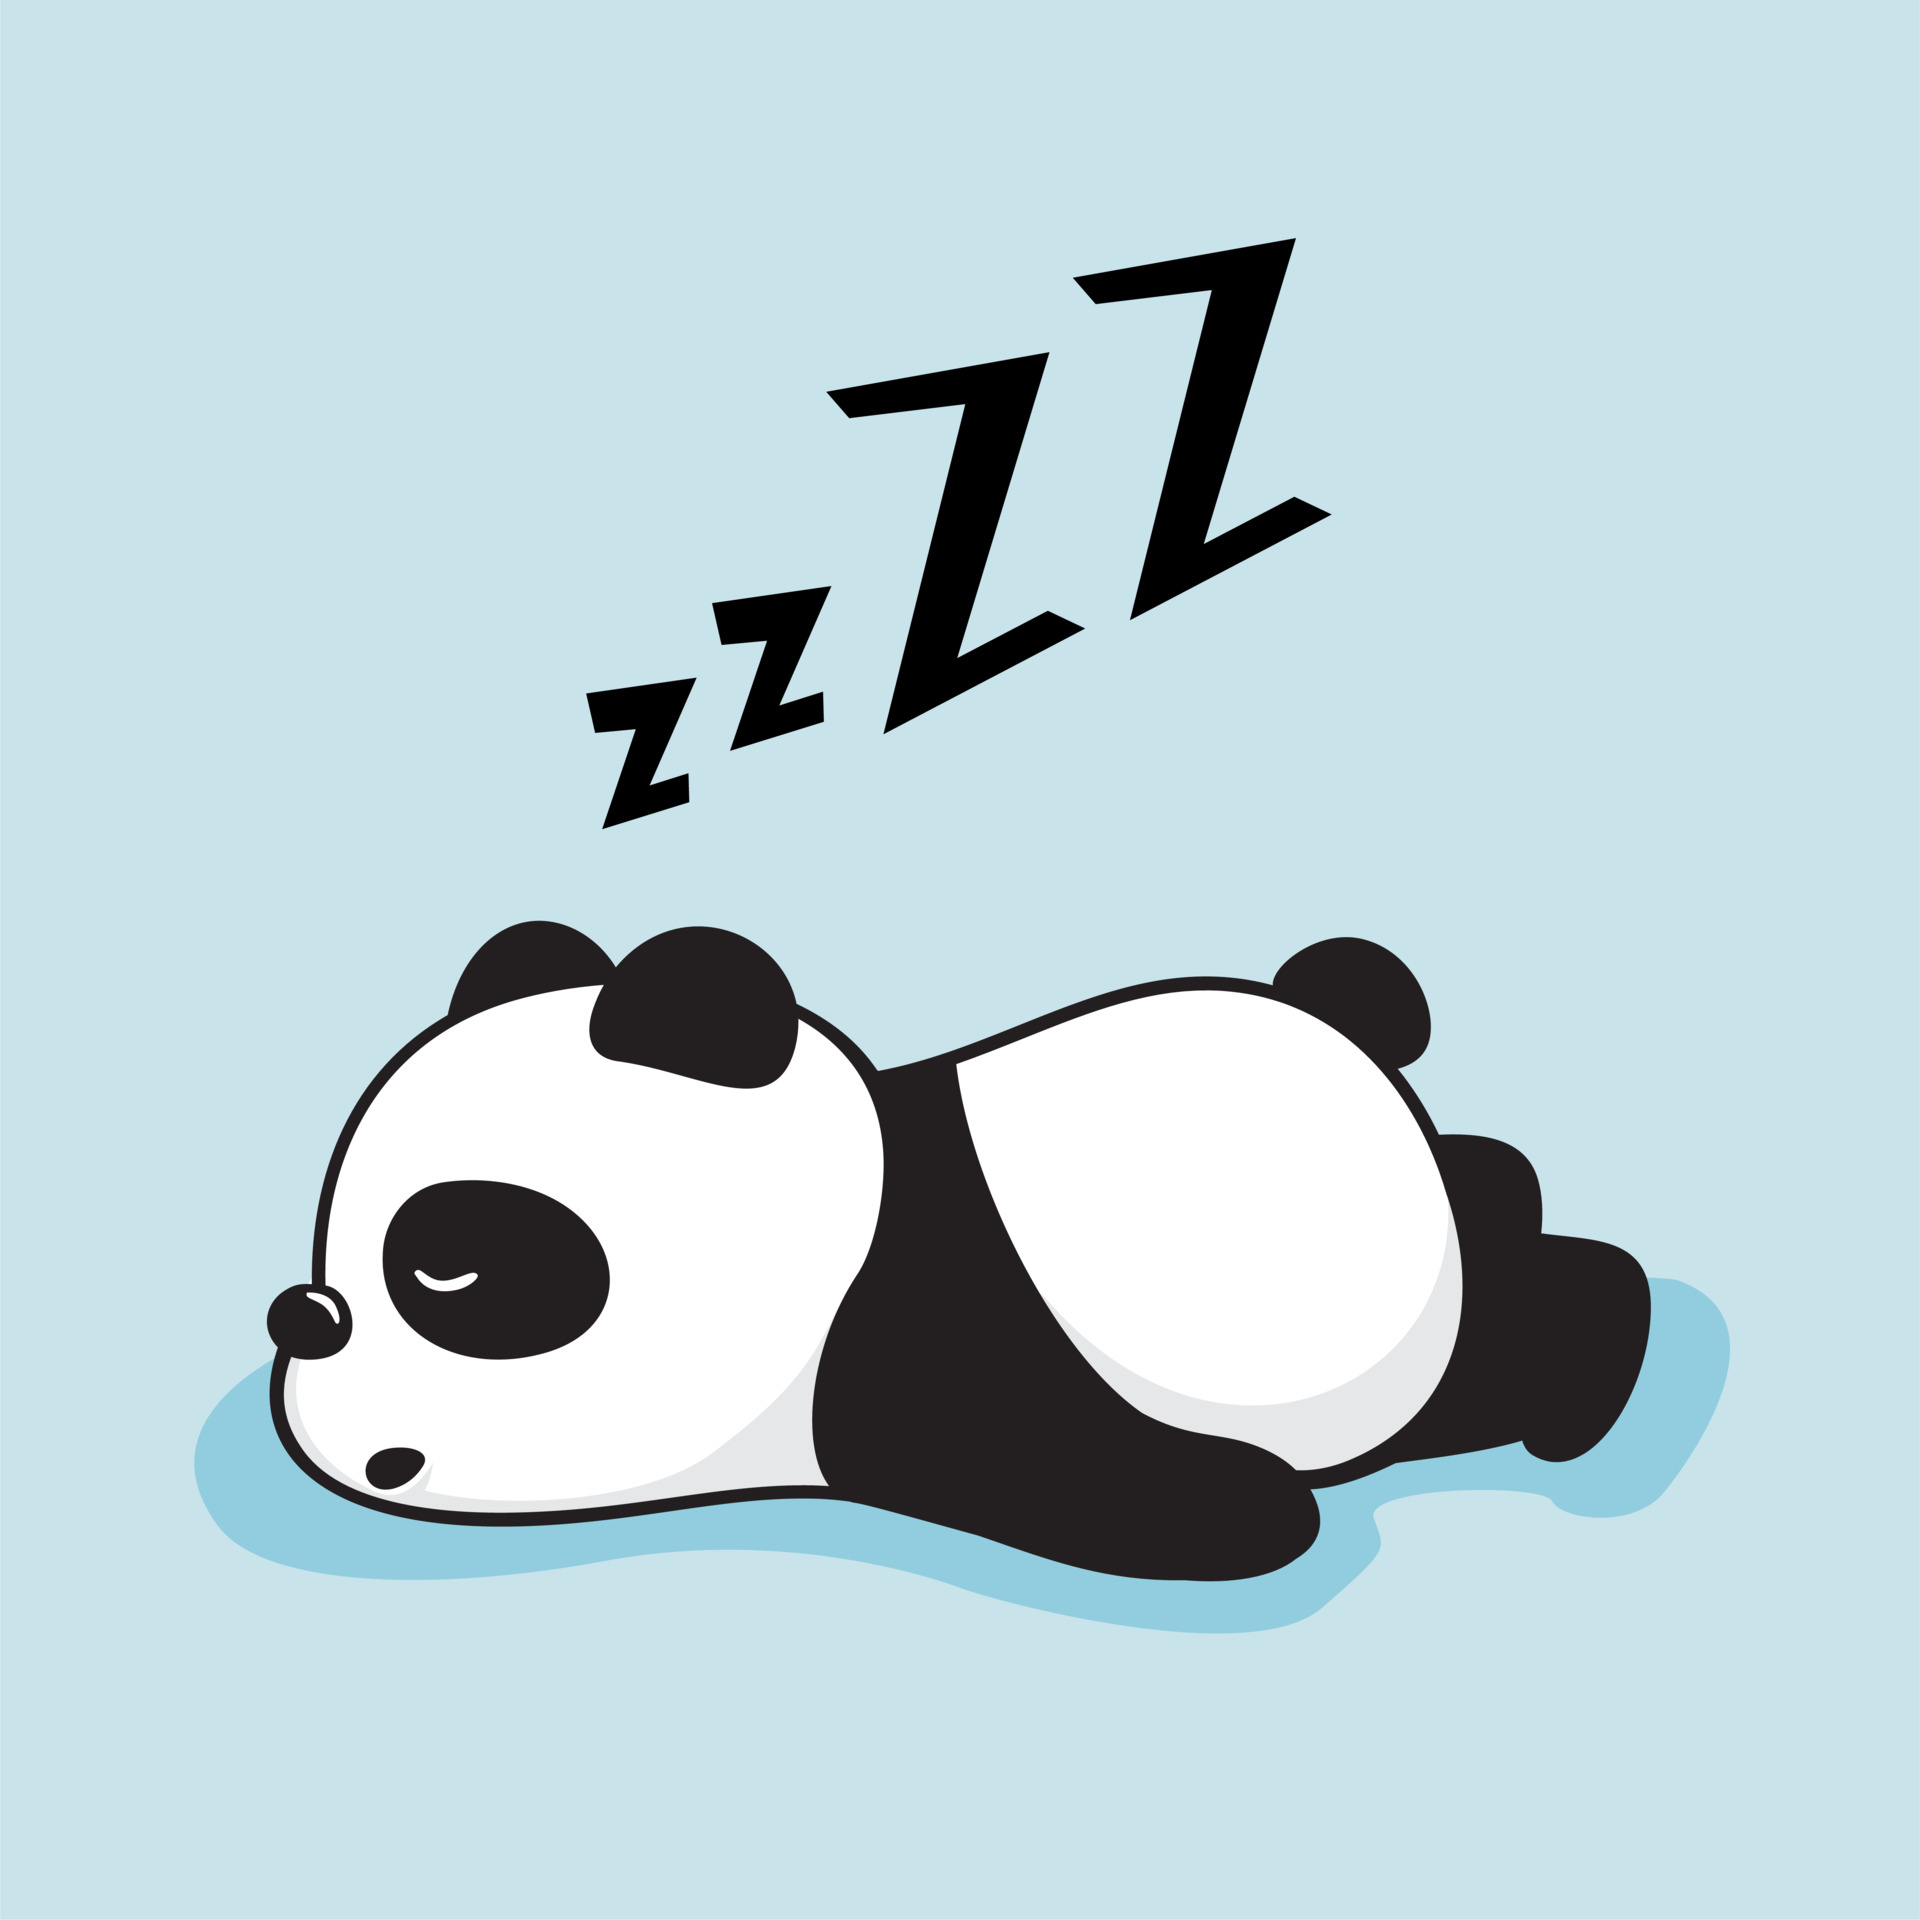 Lazy Panda Cartoon Cute Sleeping Animals Illustration 3545295 Vector